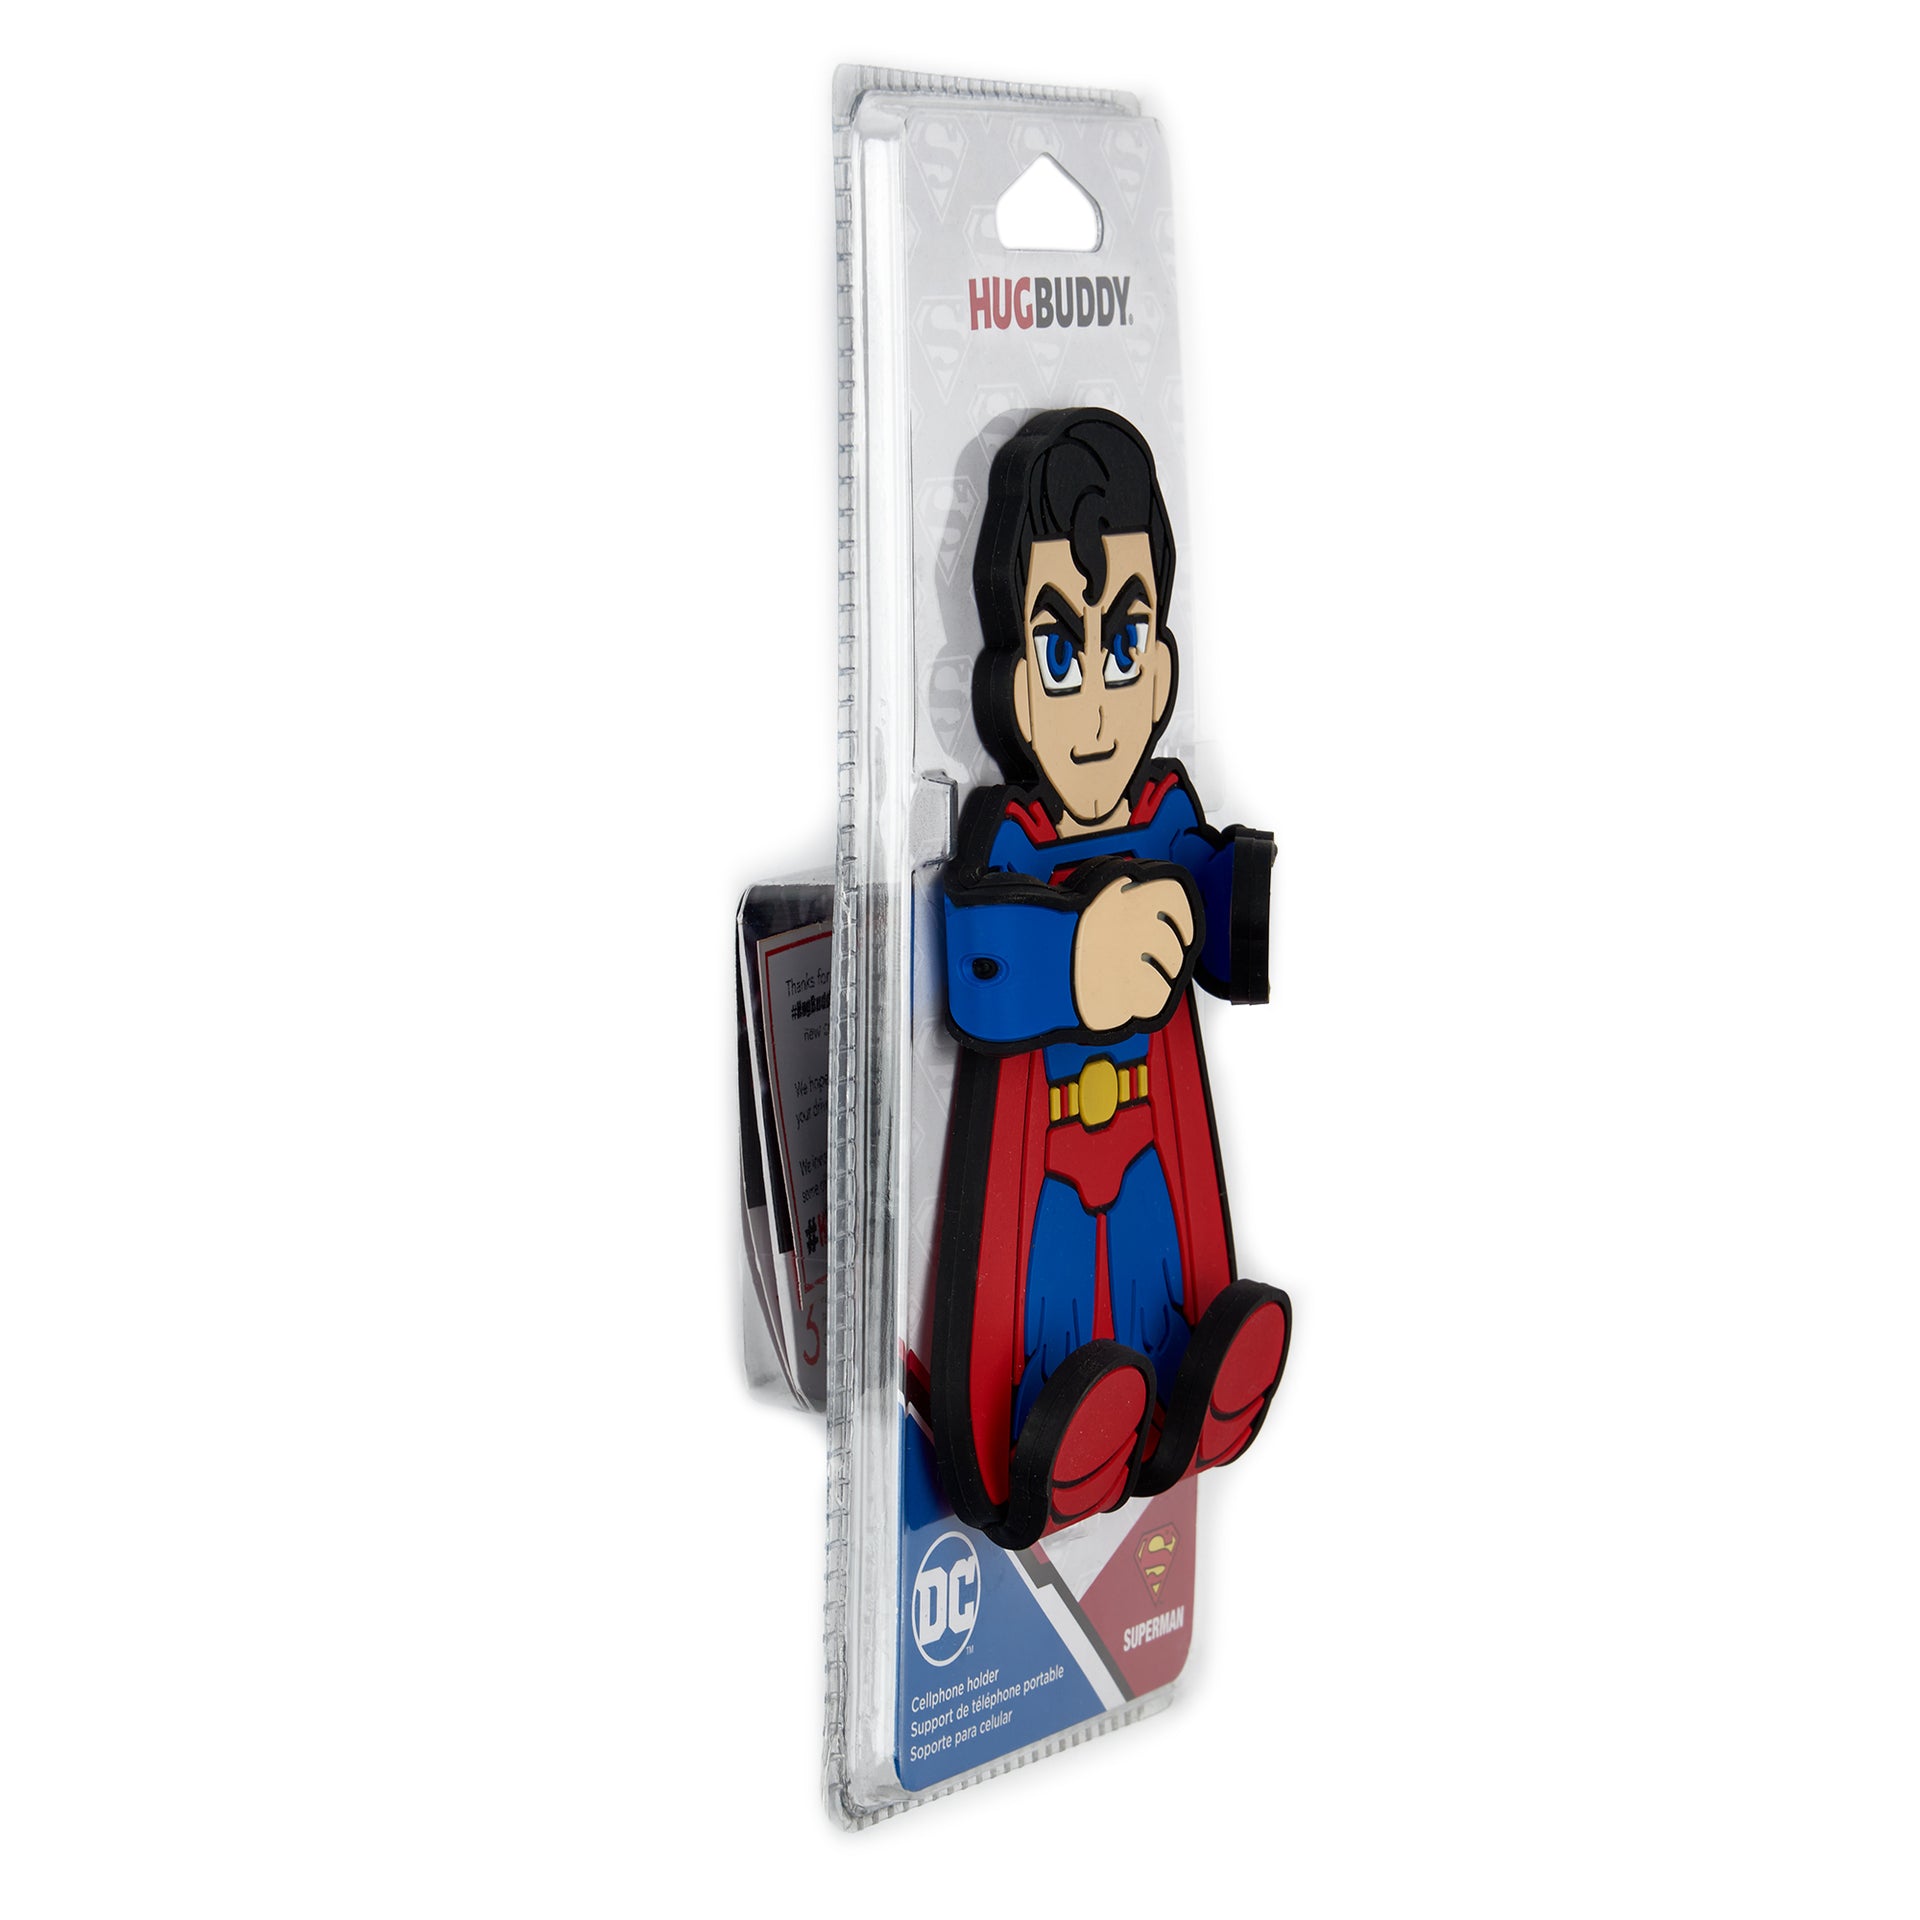 Image of DC Comics Superman Hug Buddy packaging 45 degree view